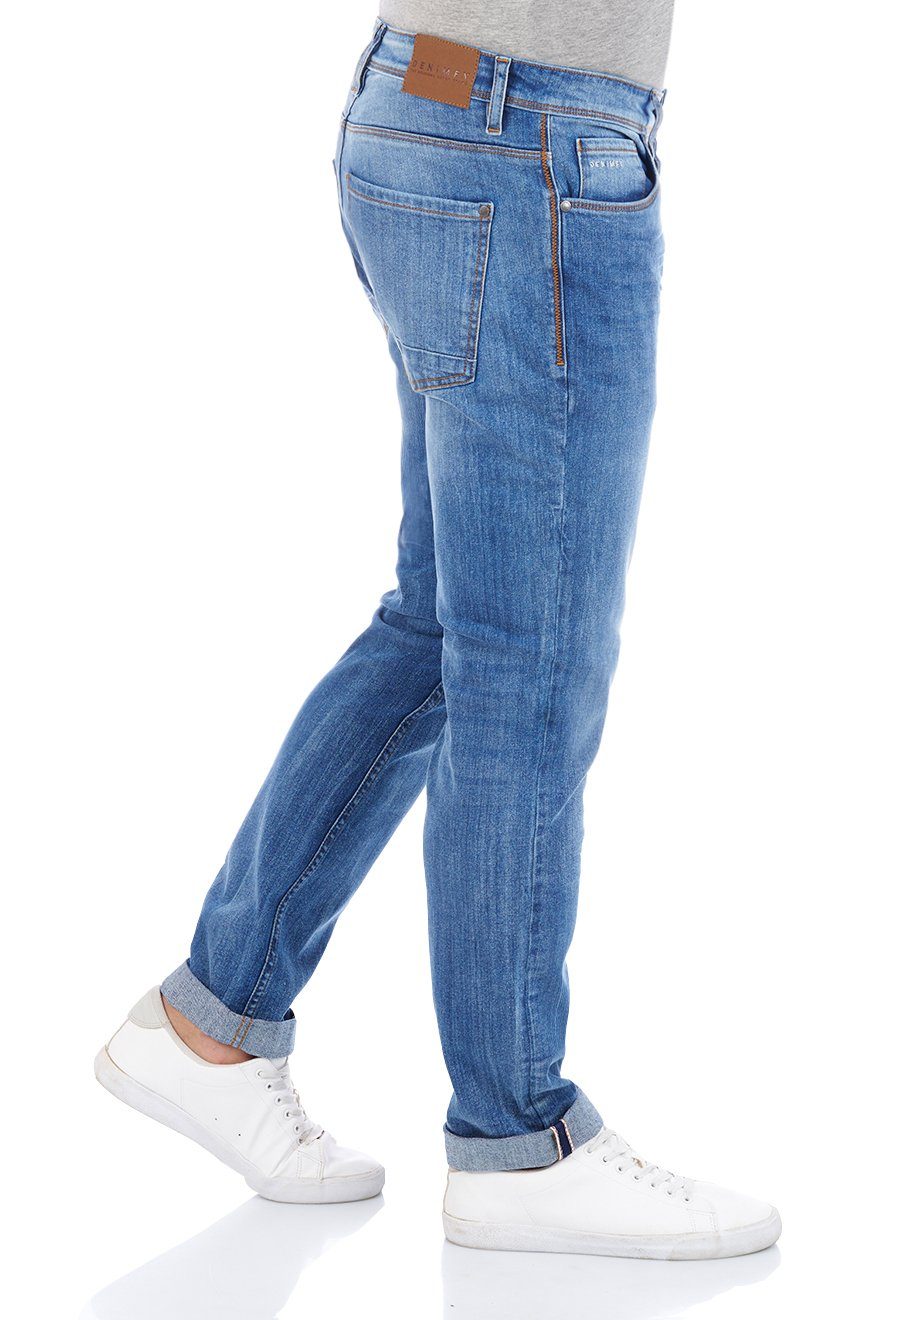 DENIMFY Straight-Jeans Jeanshose DFMiro Straight Stretch (M236) Herren Middle Jeanshose Denim Blue mit Fit